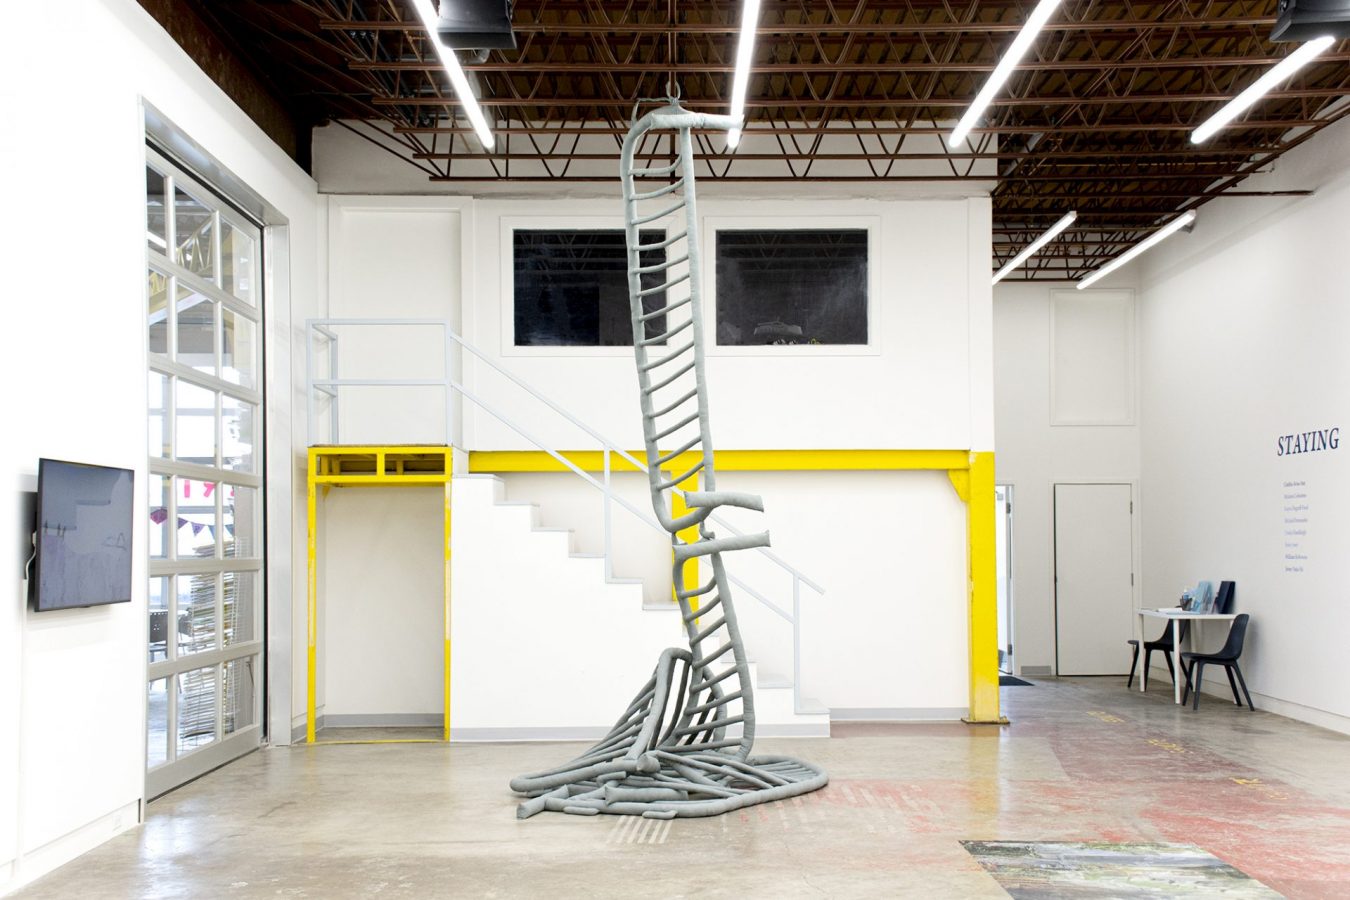 Melanie Colosimo, When is a fence a ladder? (2021-2022) Nylon réflecteur, polyester. Édition 1-4 de 6, 229 x 94 x 23 cm chq. Photo : Ryan Josey. Courtoisie de The Blue Building Gallery